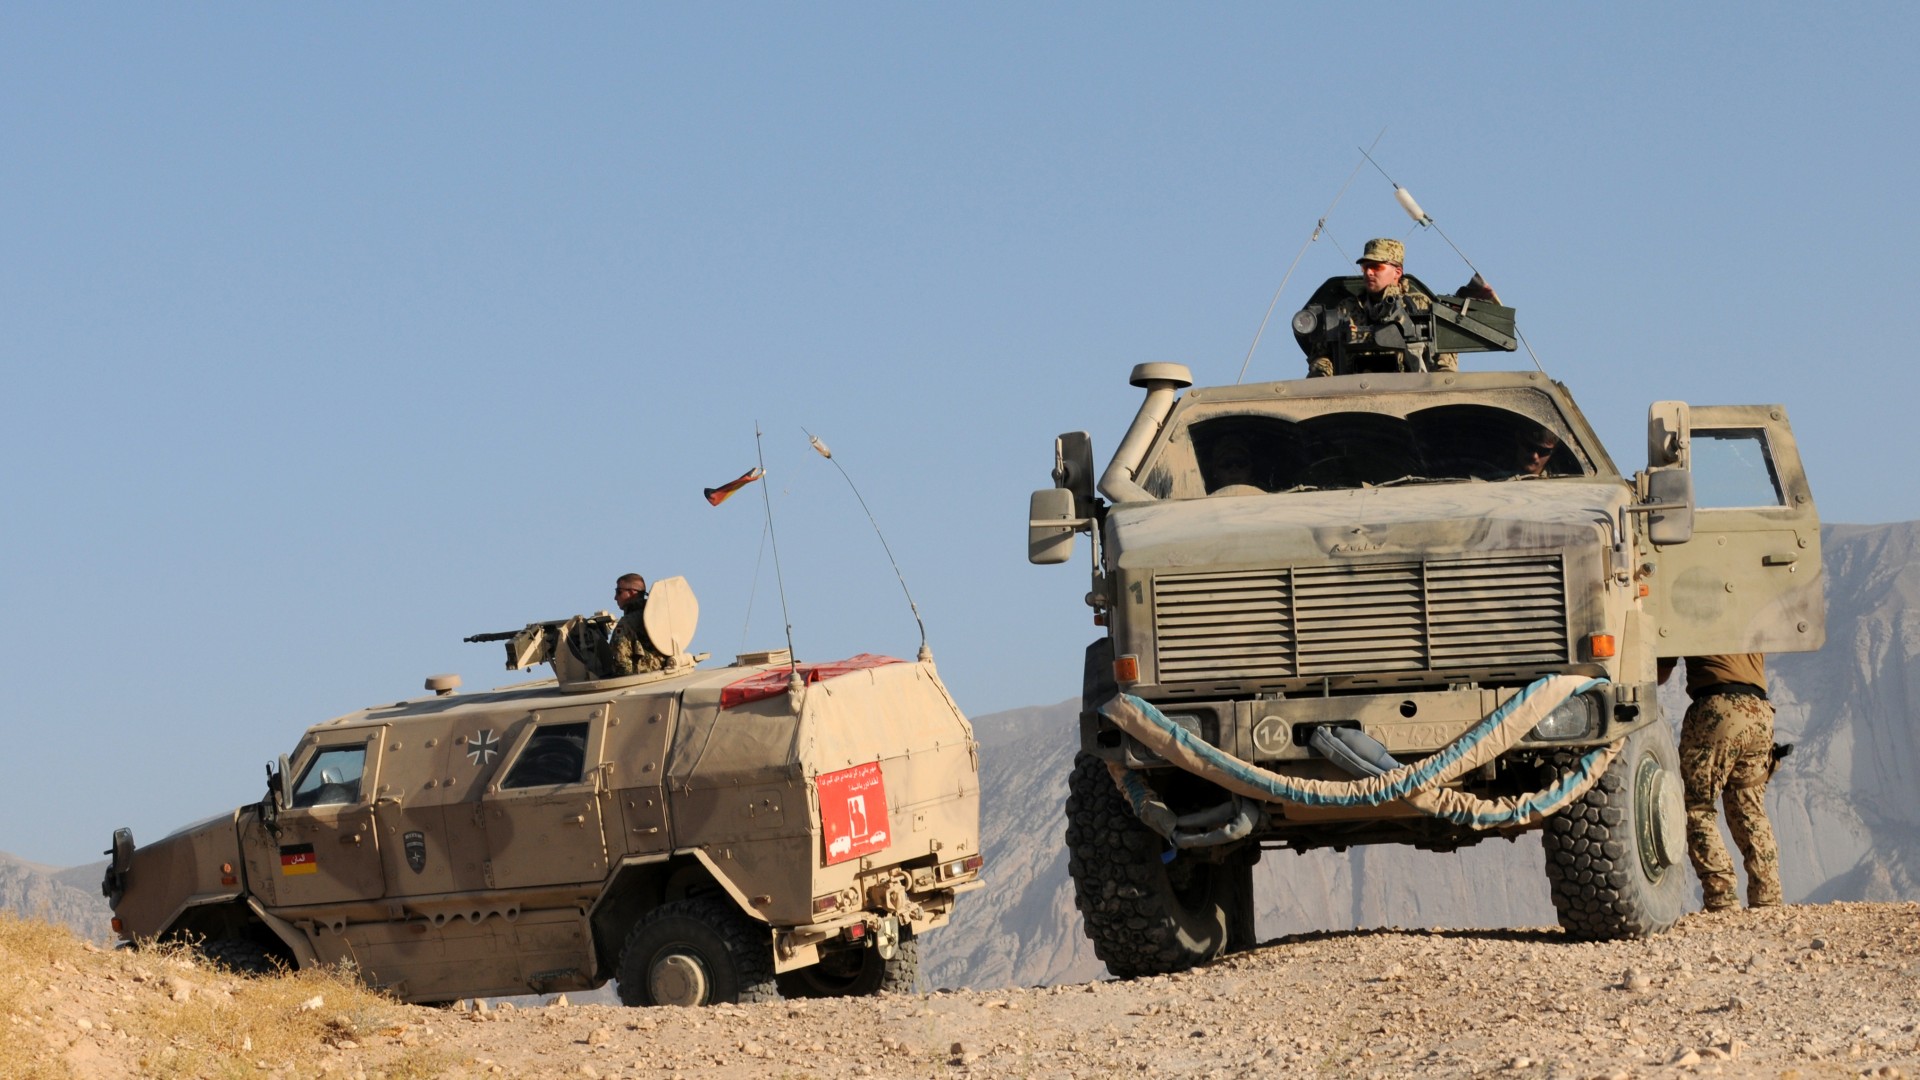 бронеавтомобиль, броневик, солдат, Афганистан, ATF Dingo, KMW, infantry mobility vehicle, MPPV PC, soldier, Afghanistan, Bundeswehr (horizontal)